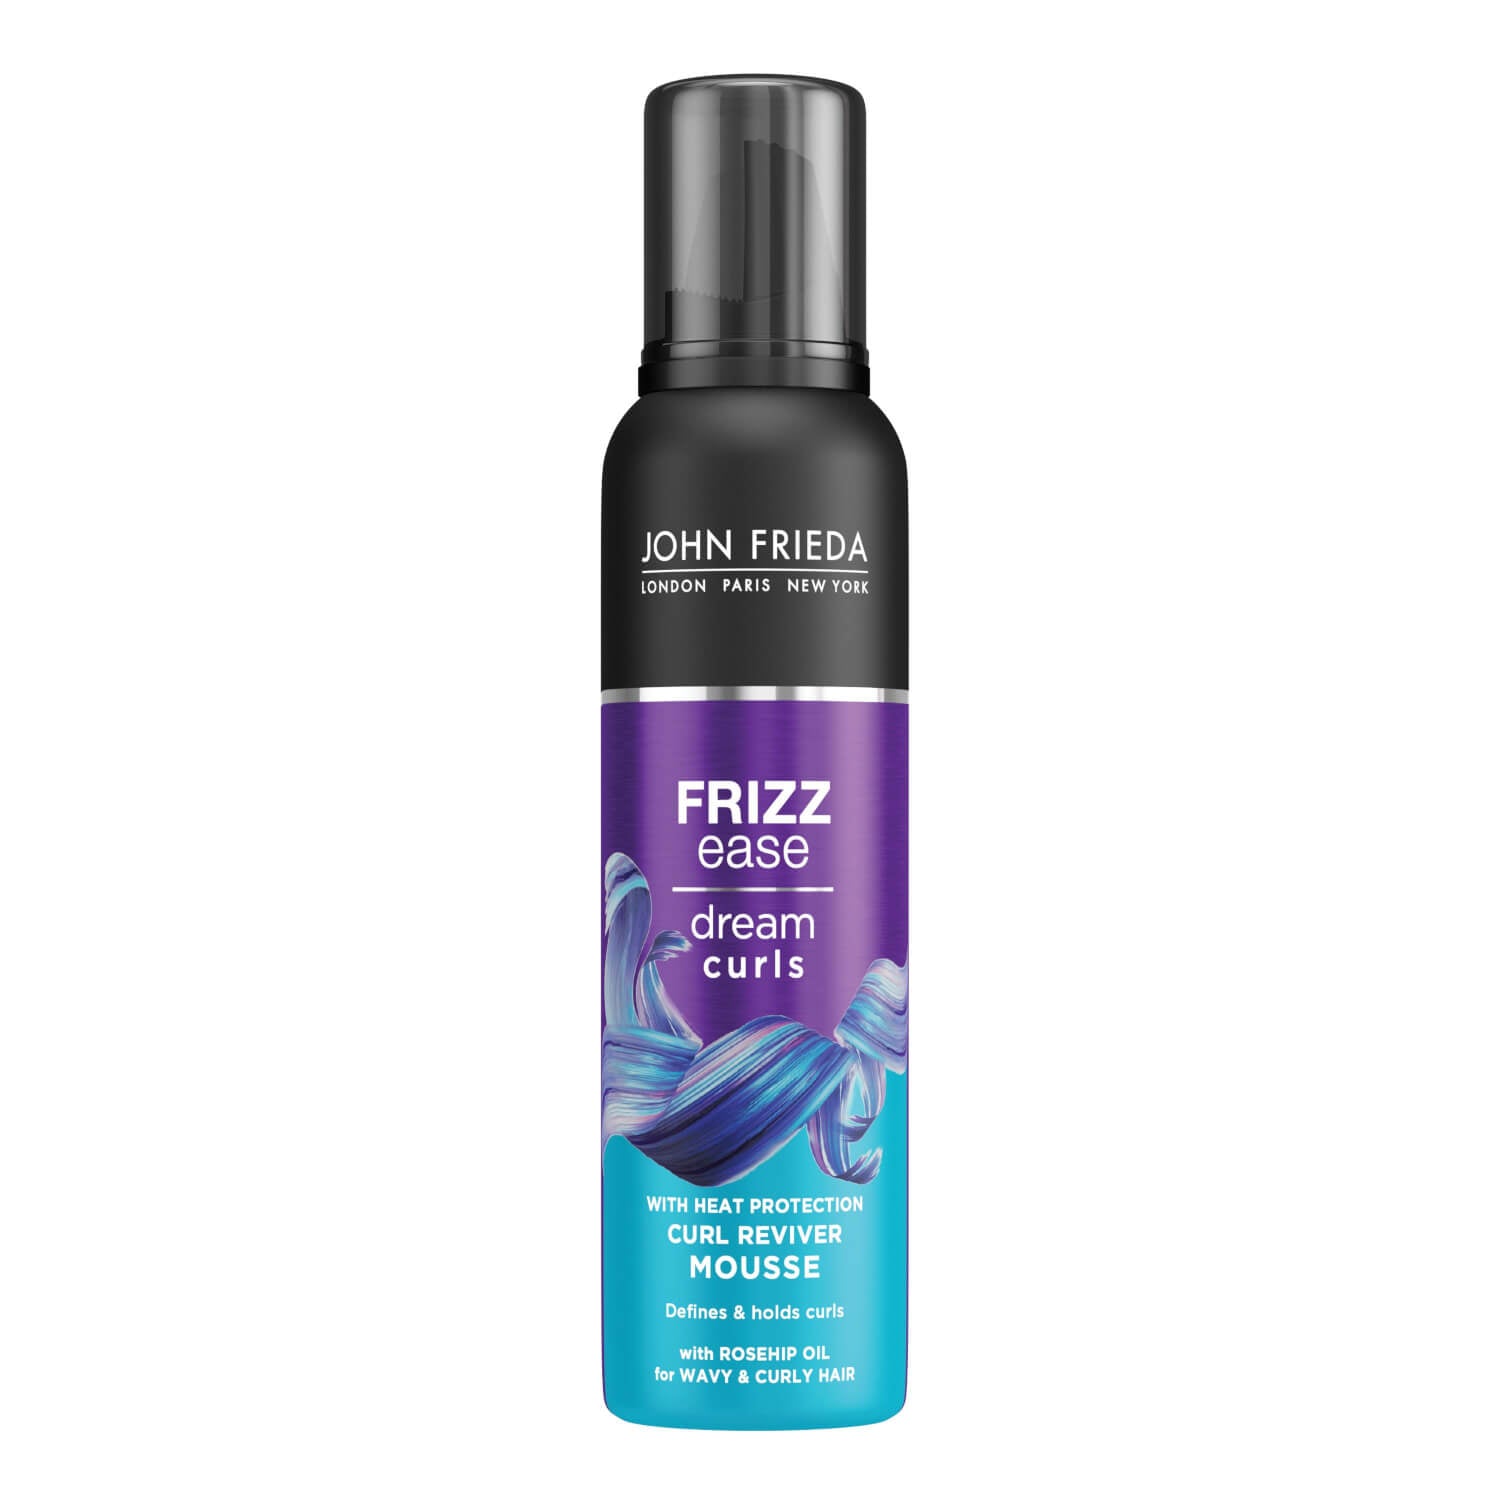 John Frieda Frizz Ease Dream Curls Reviver Mousse 1 Shaws Department Stores